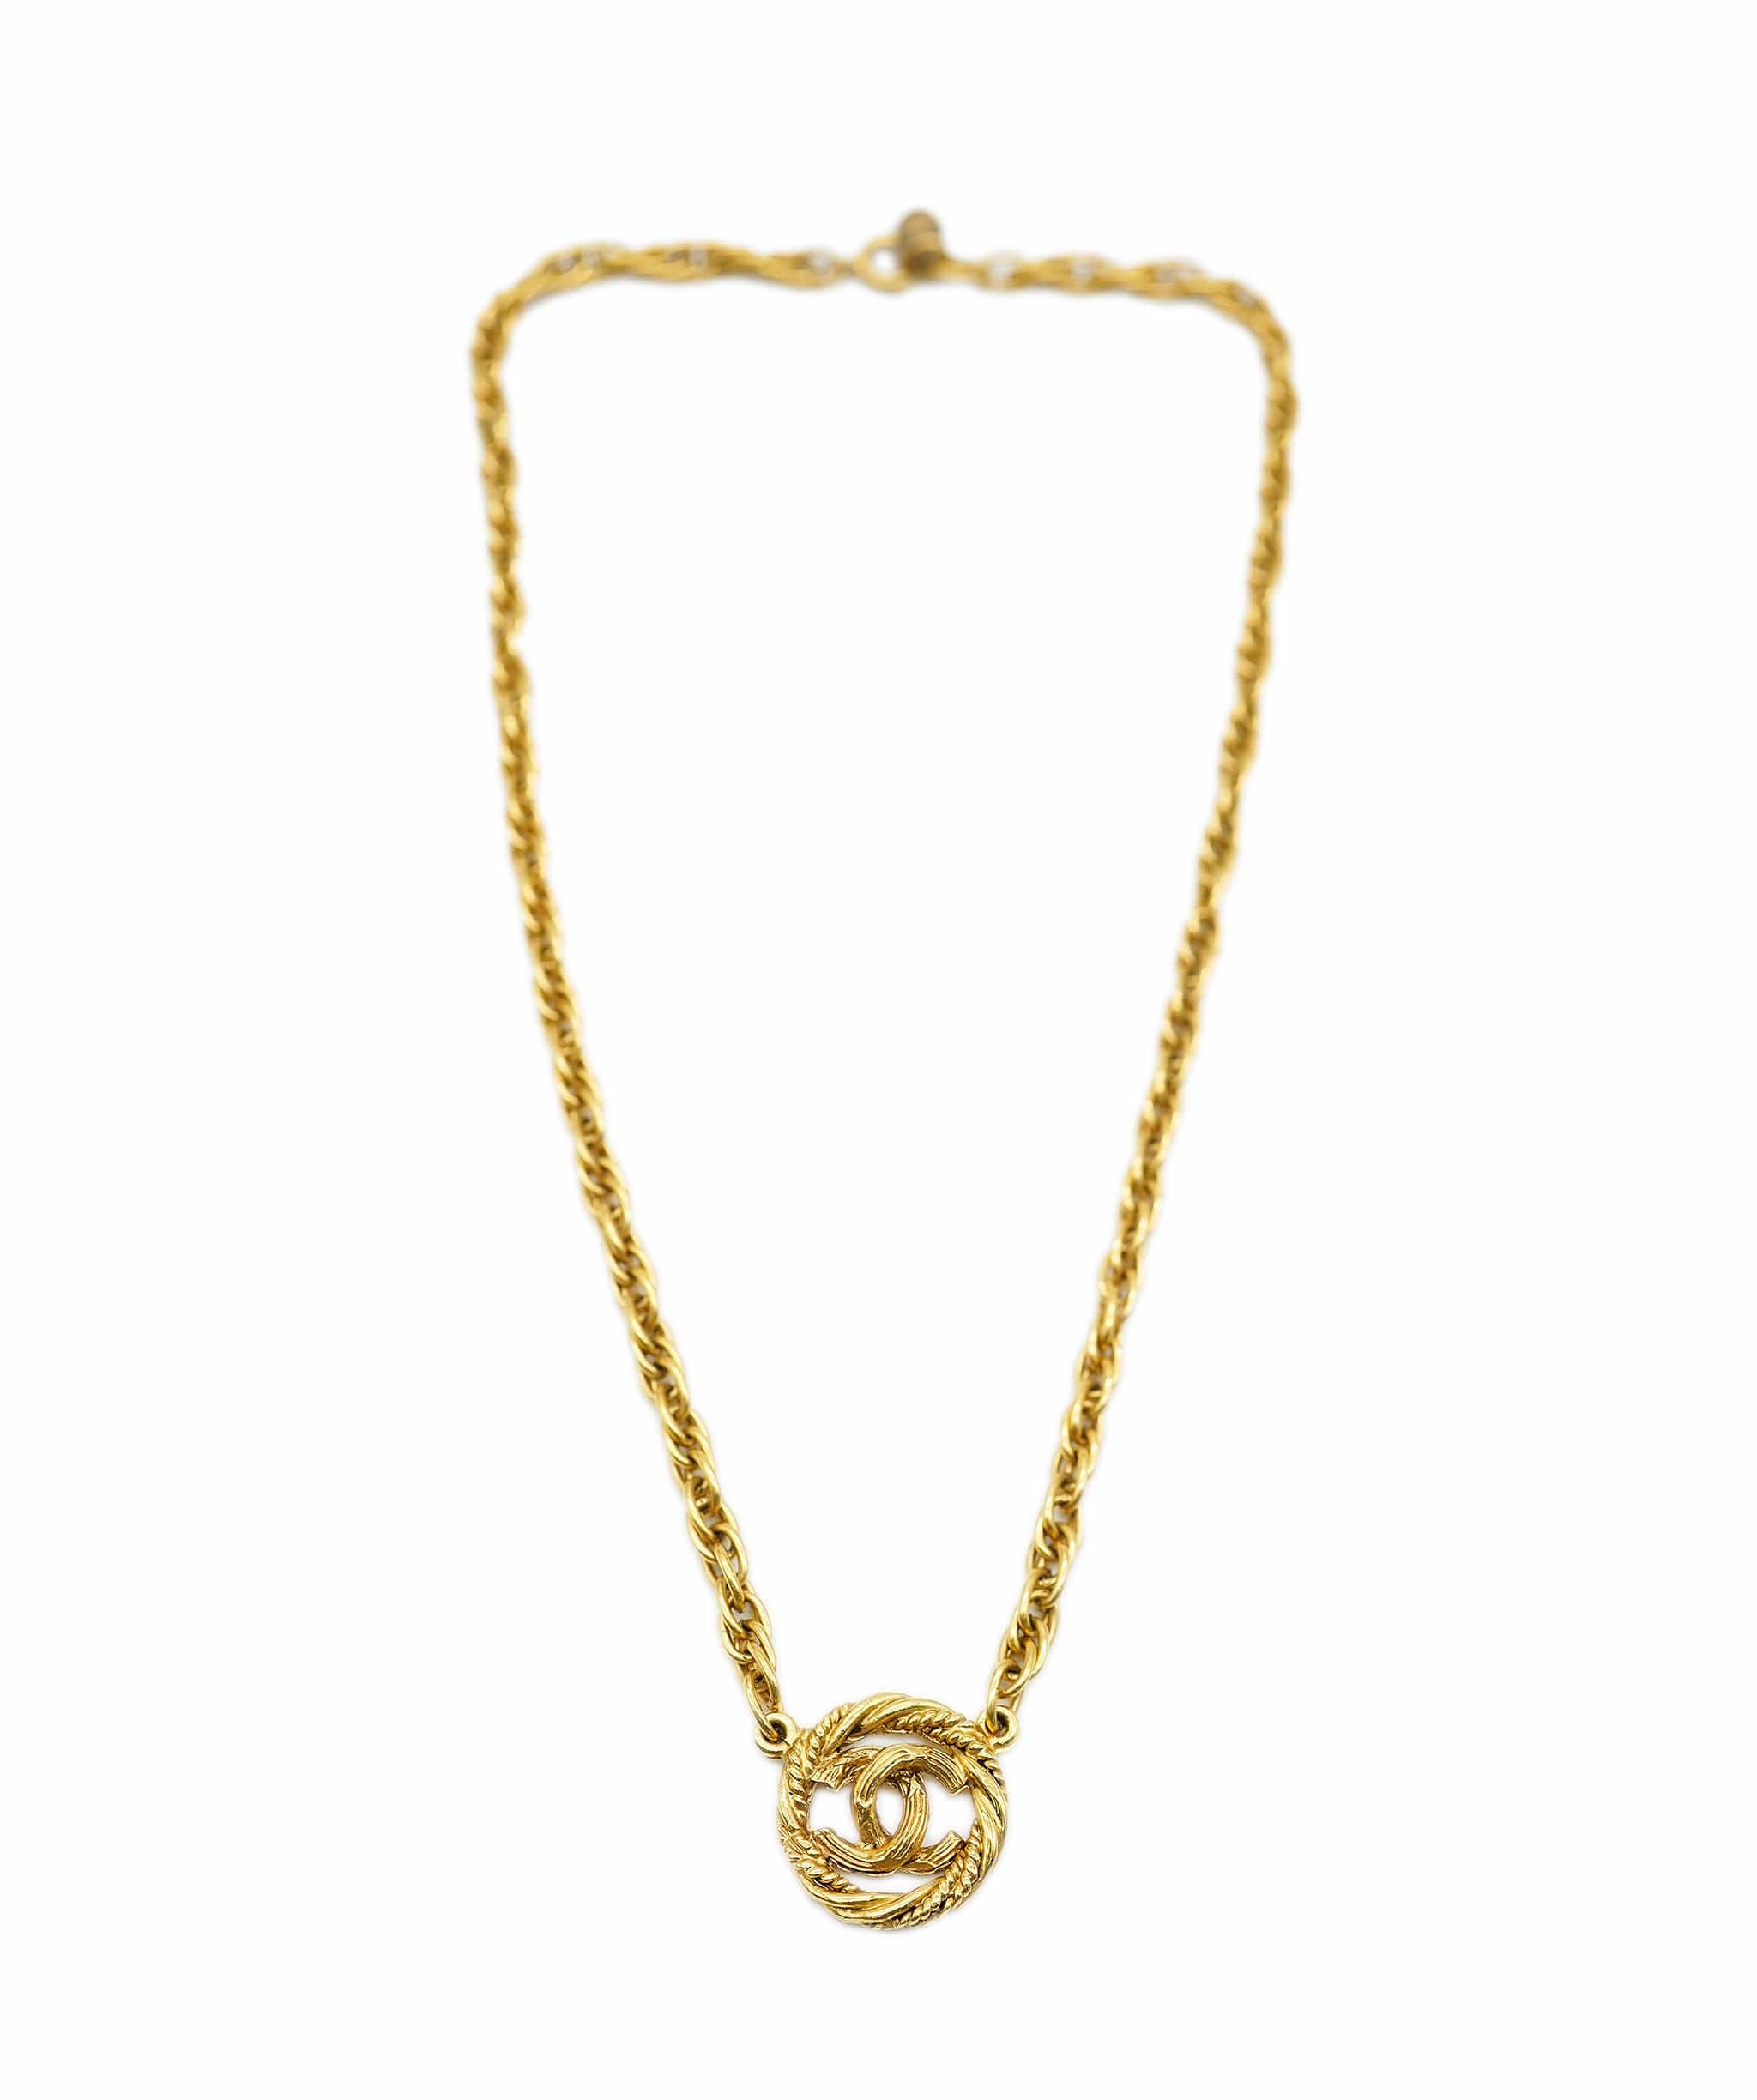 Chanel Chanel Vintage Medallion Necklace